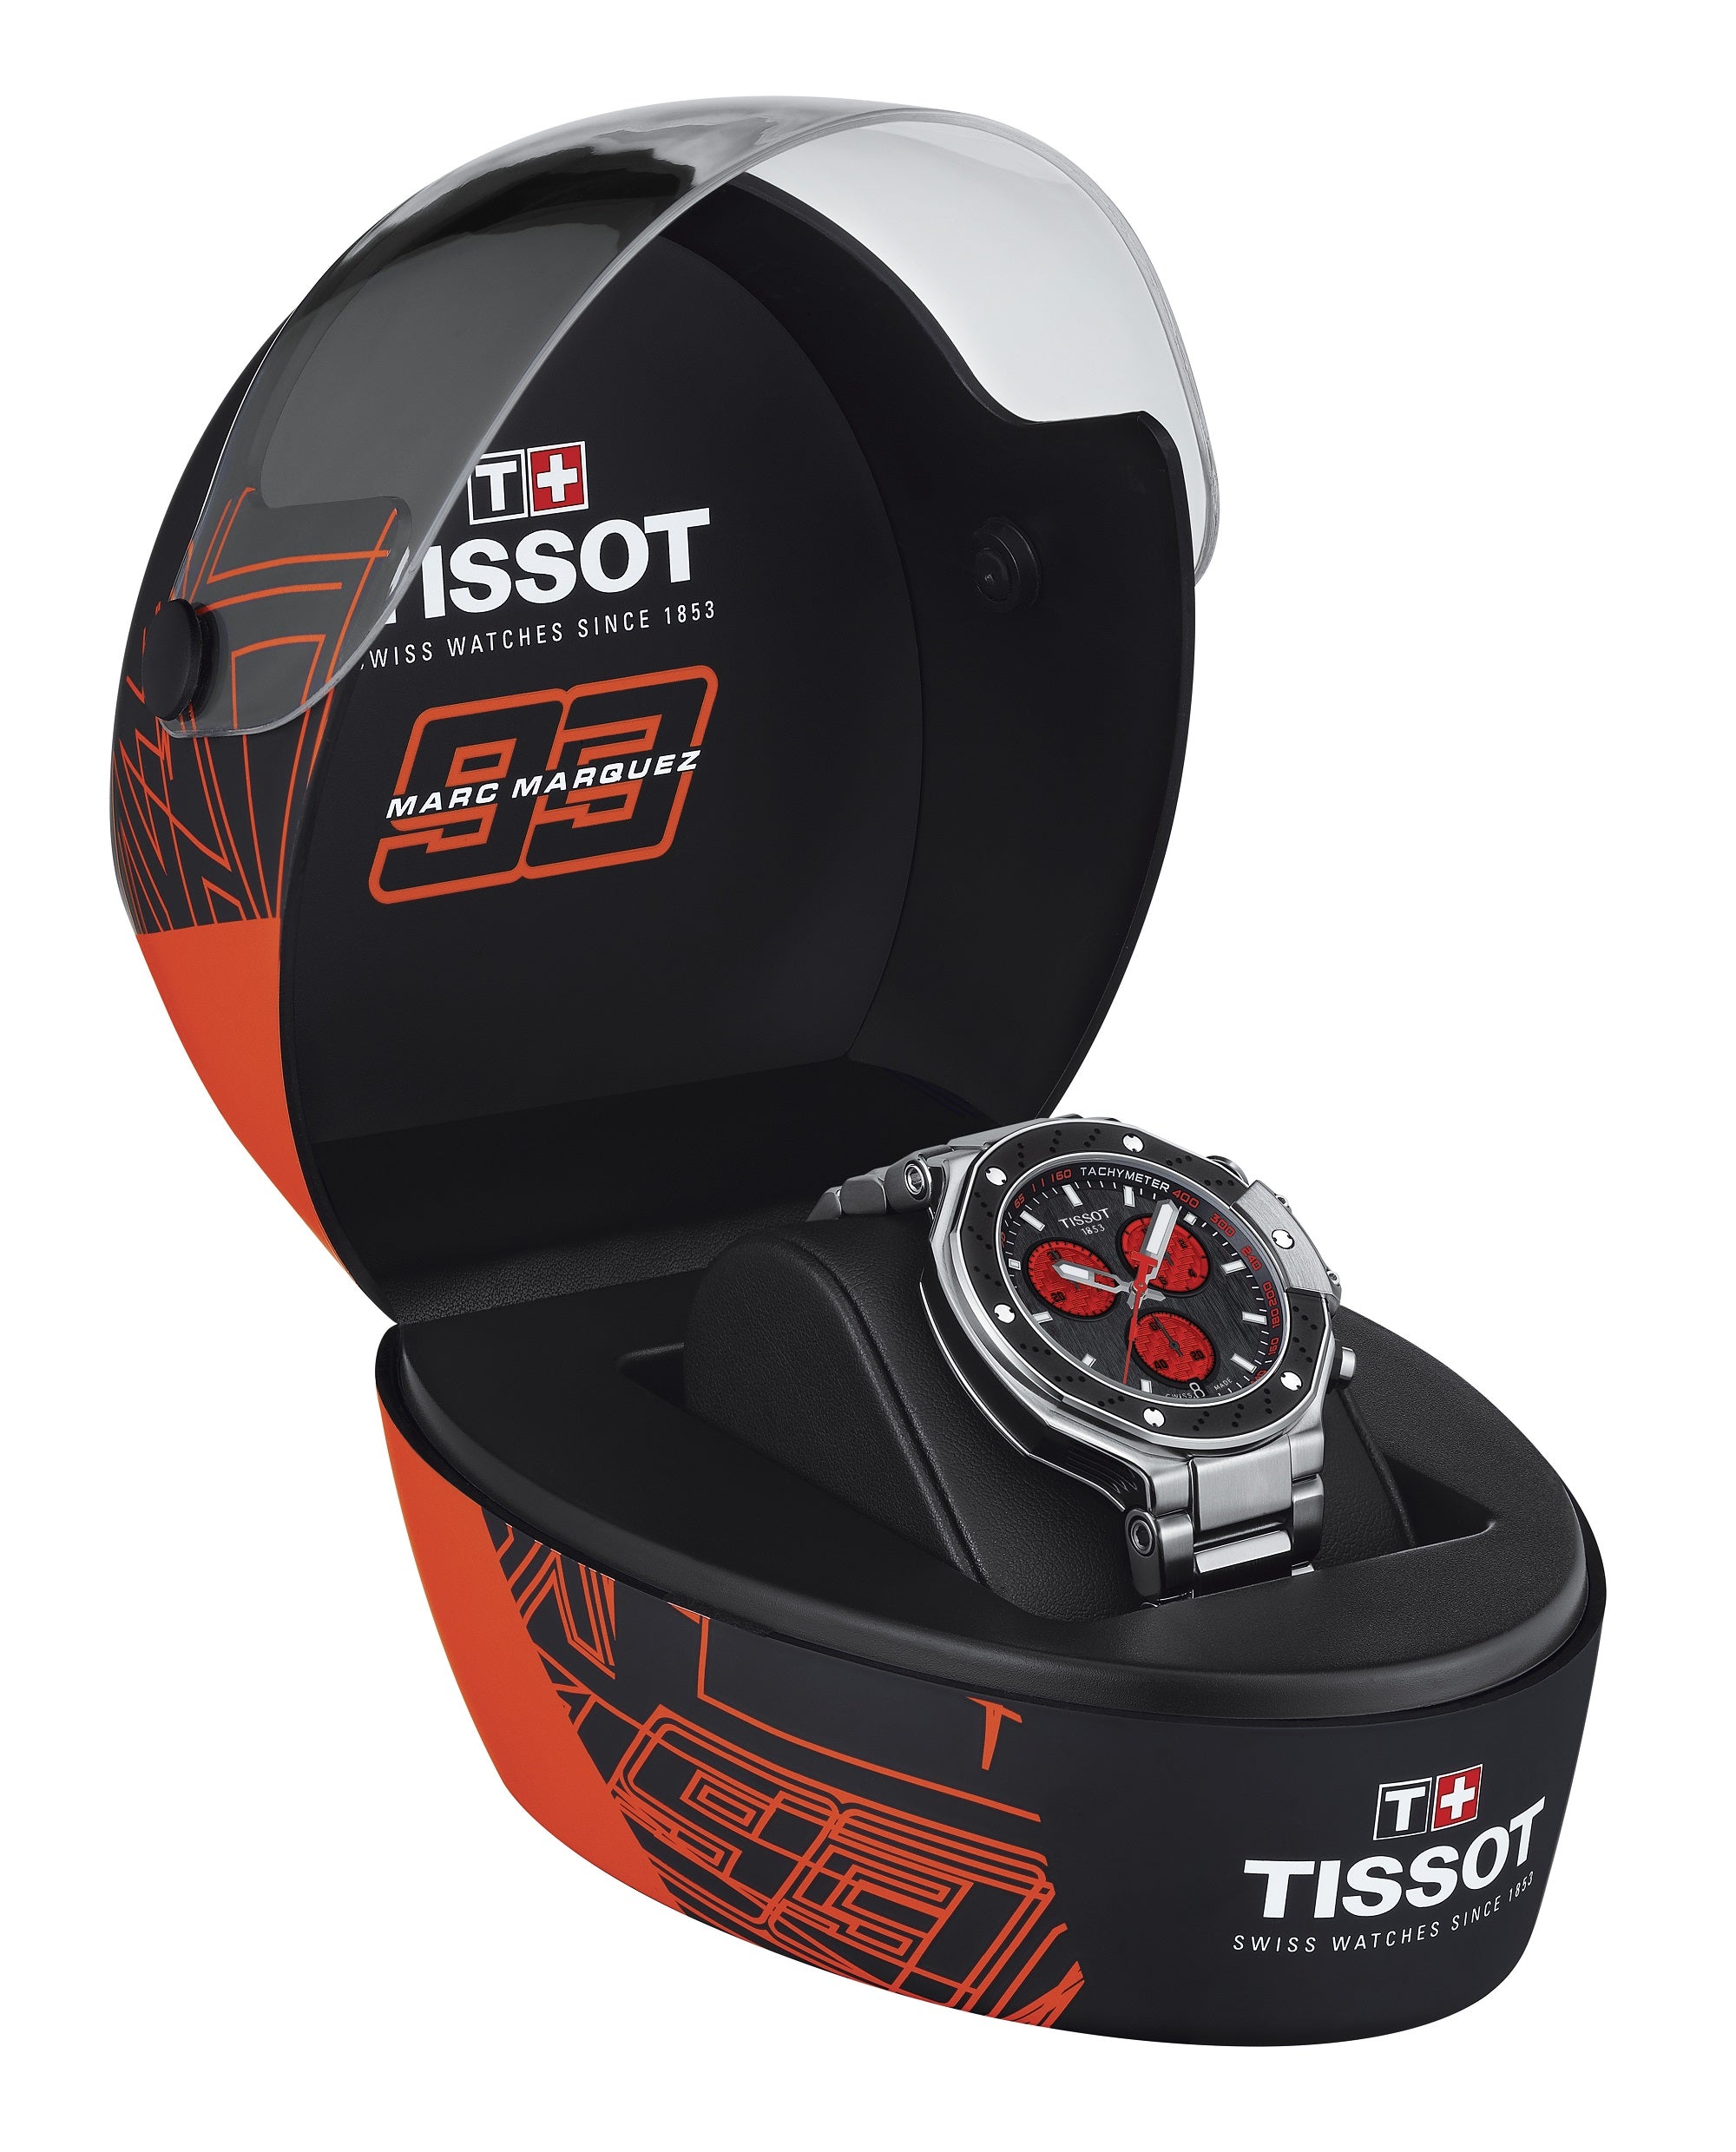 Reloj Tissot para Hombre T-RACE TISSOT